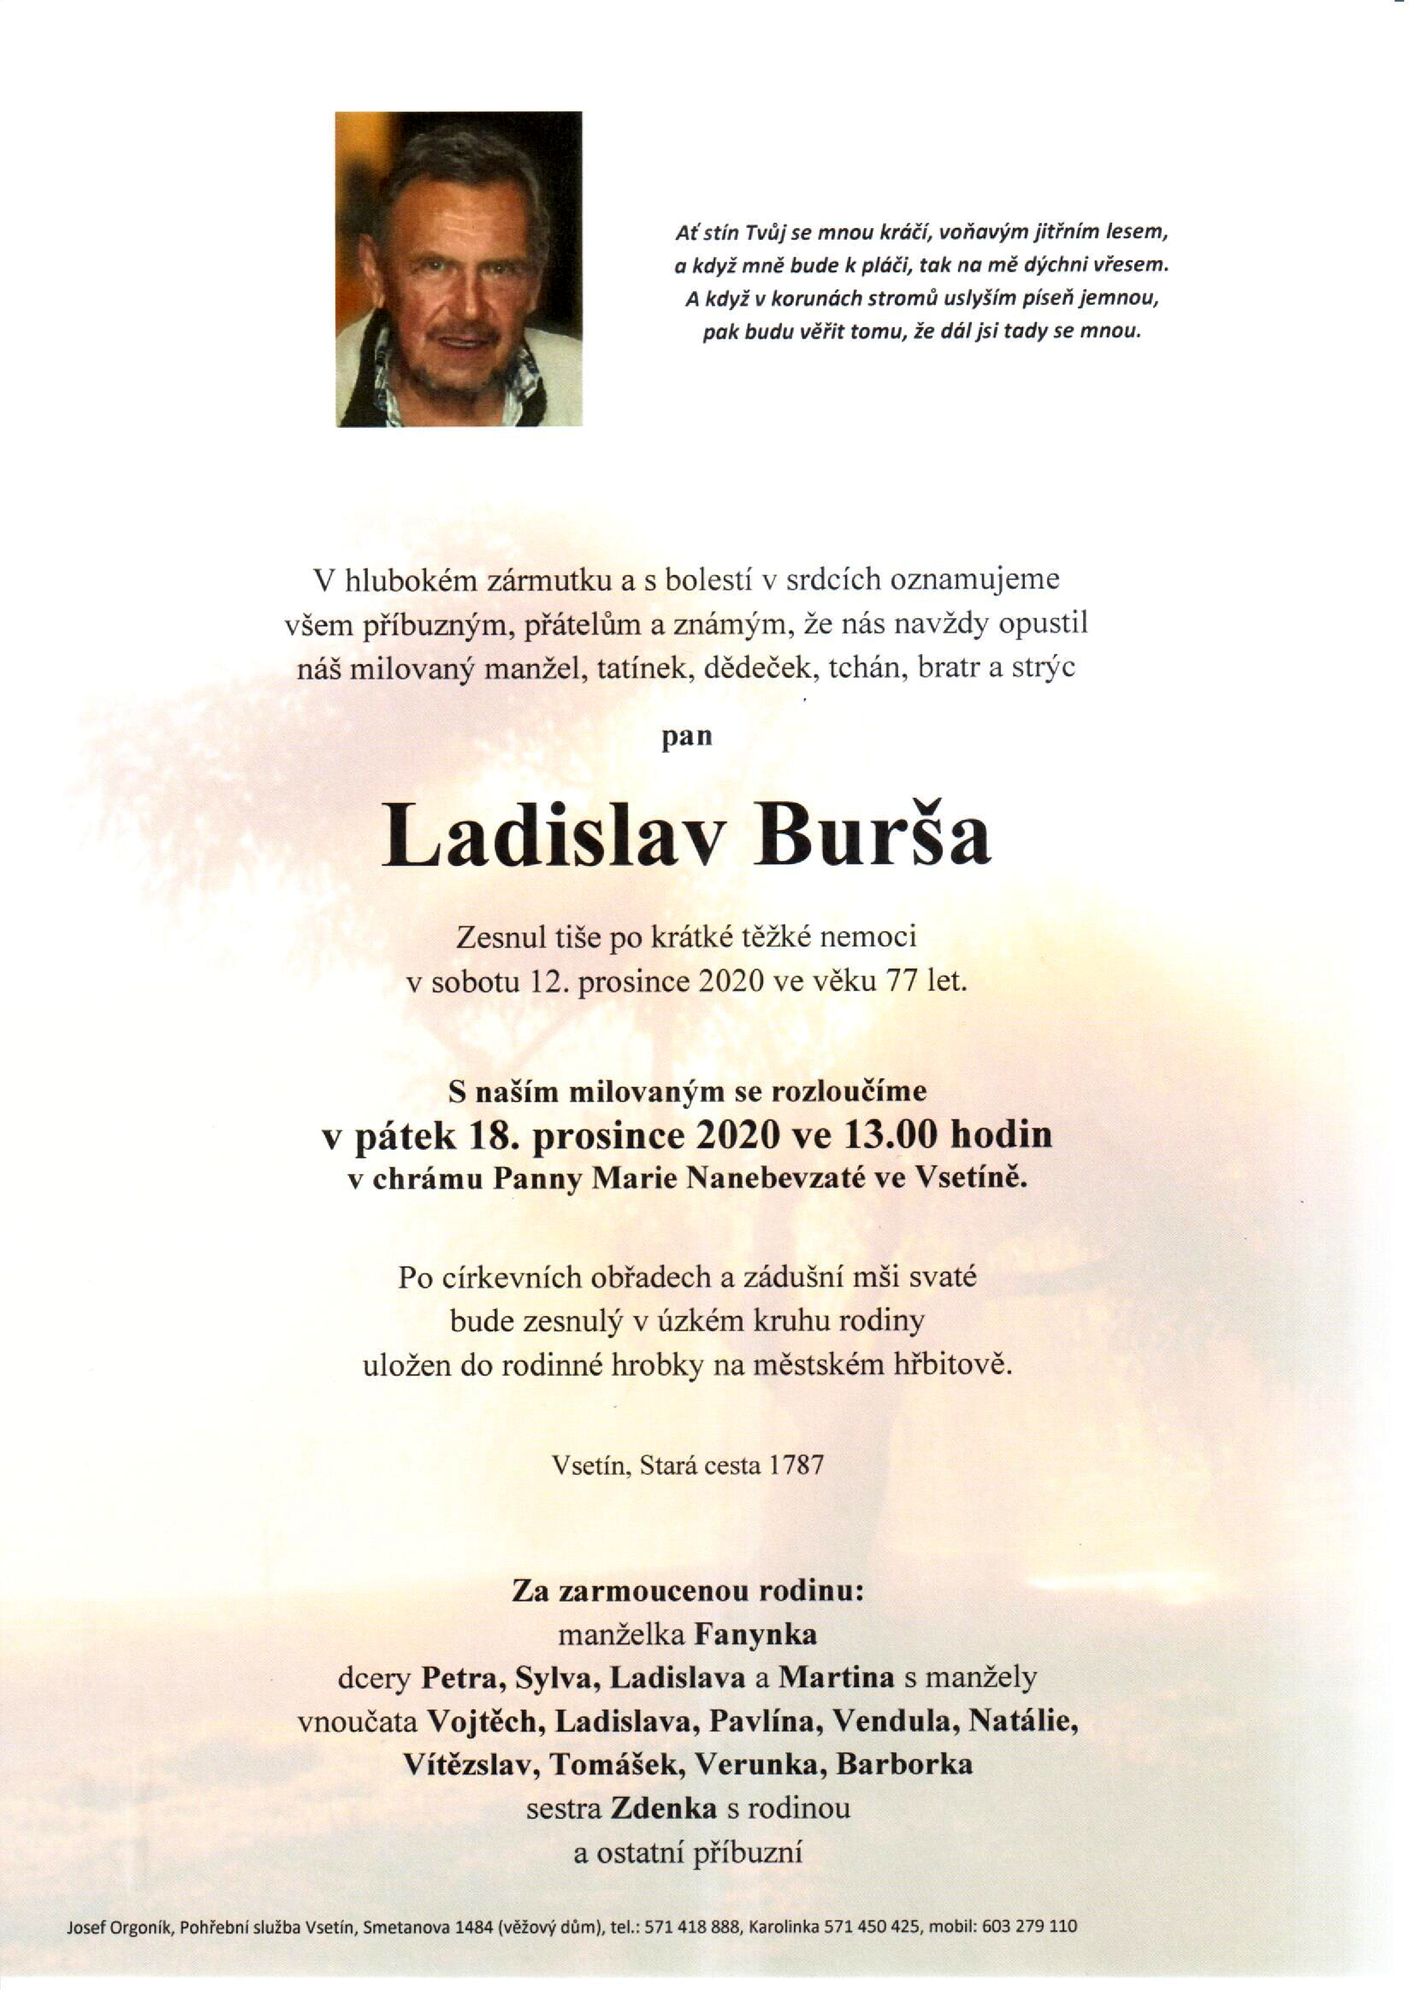 Ladislav Burša